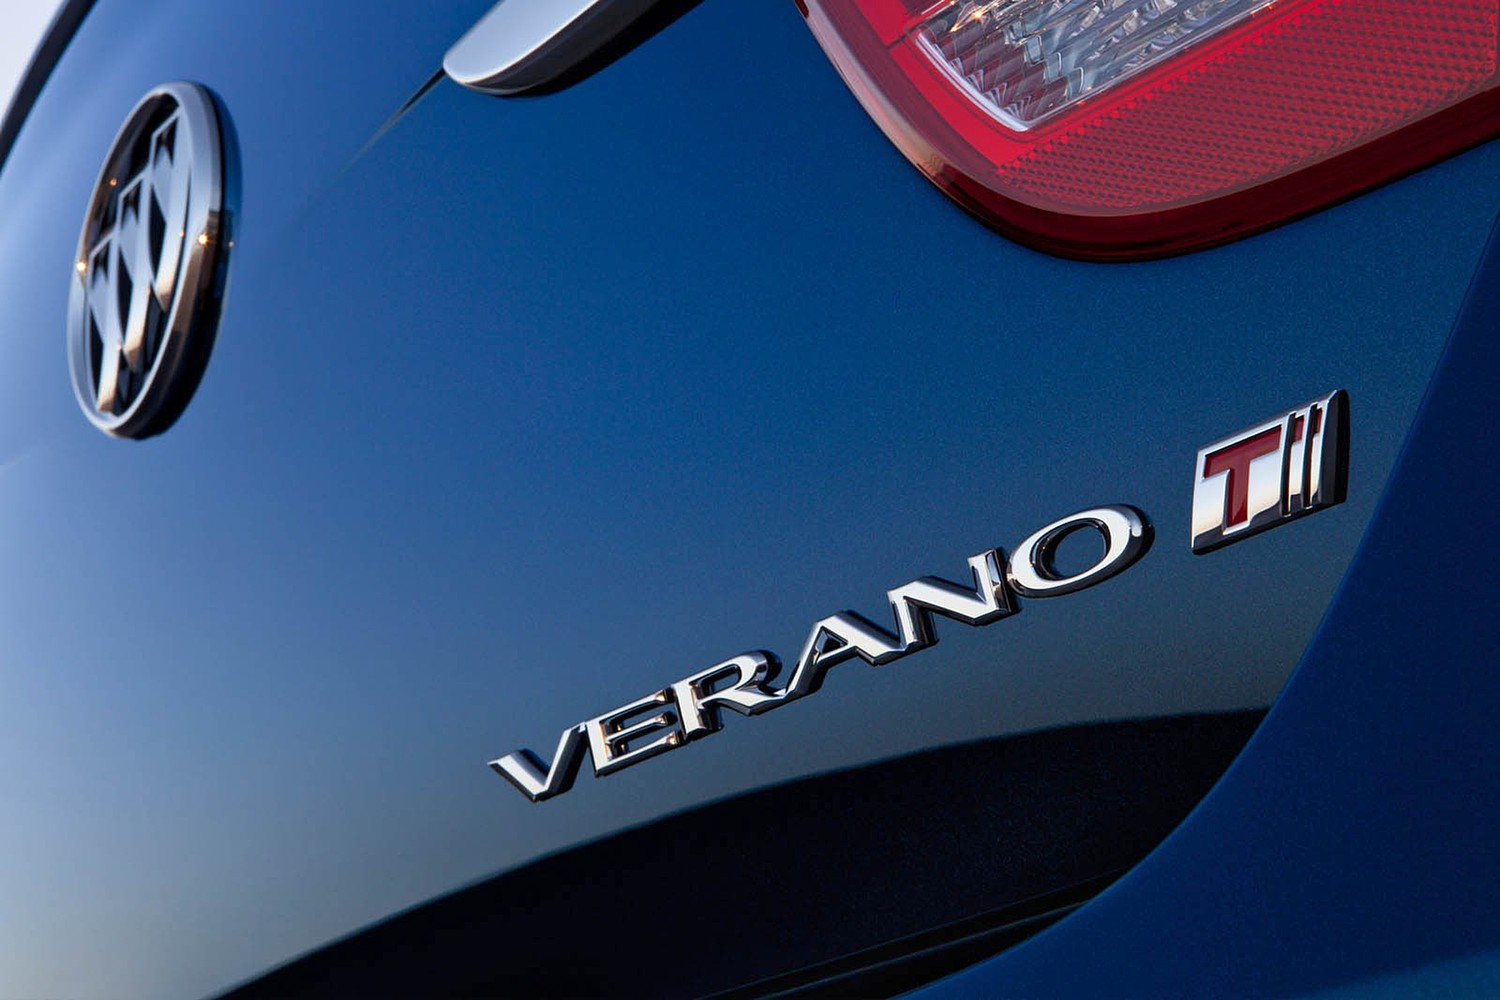 Buick Verano Premium Group Sedan Rear Badge (2013 model year shown)